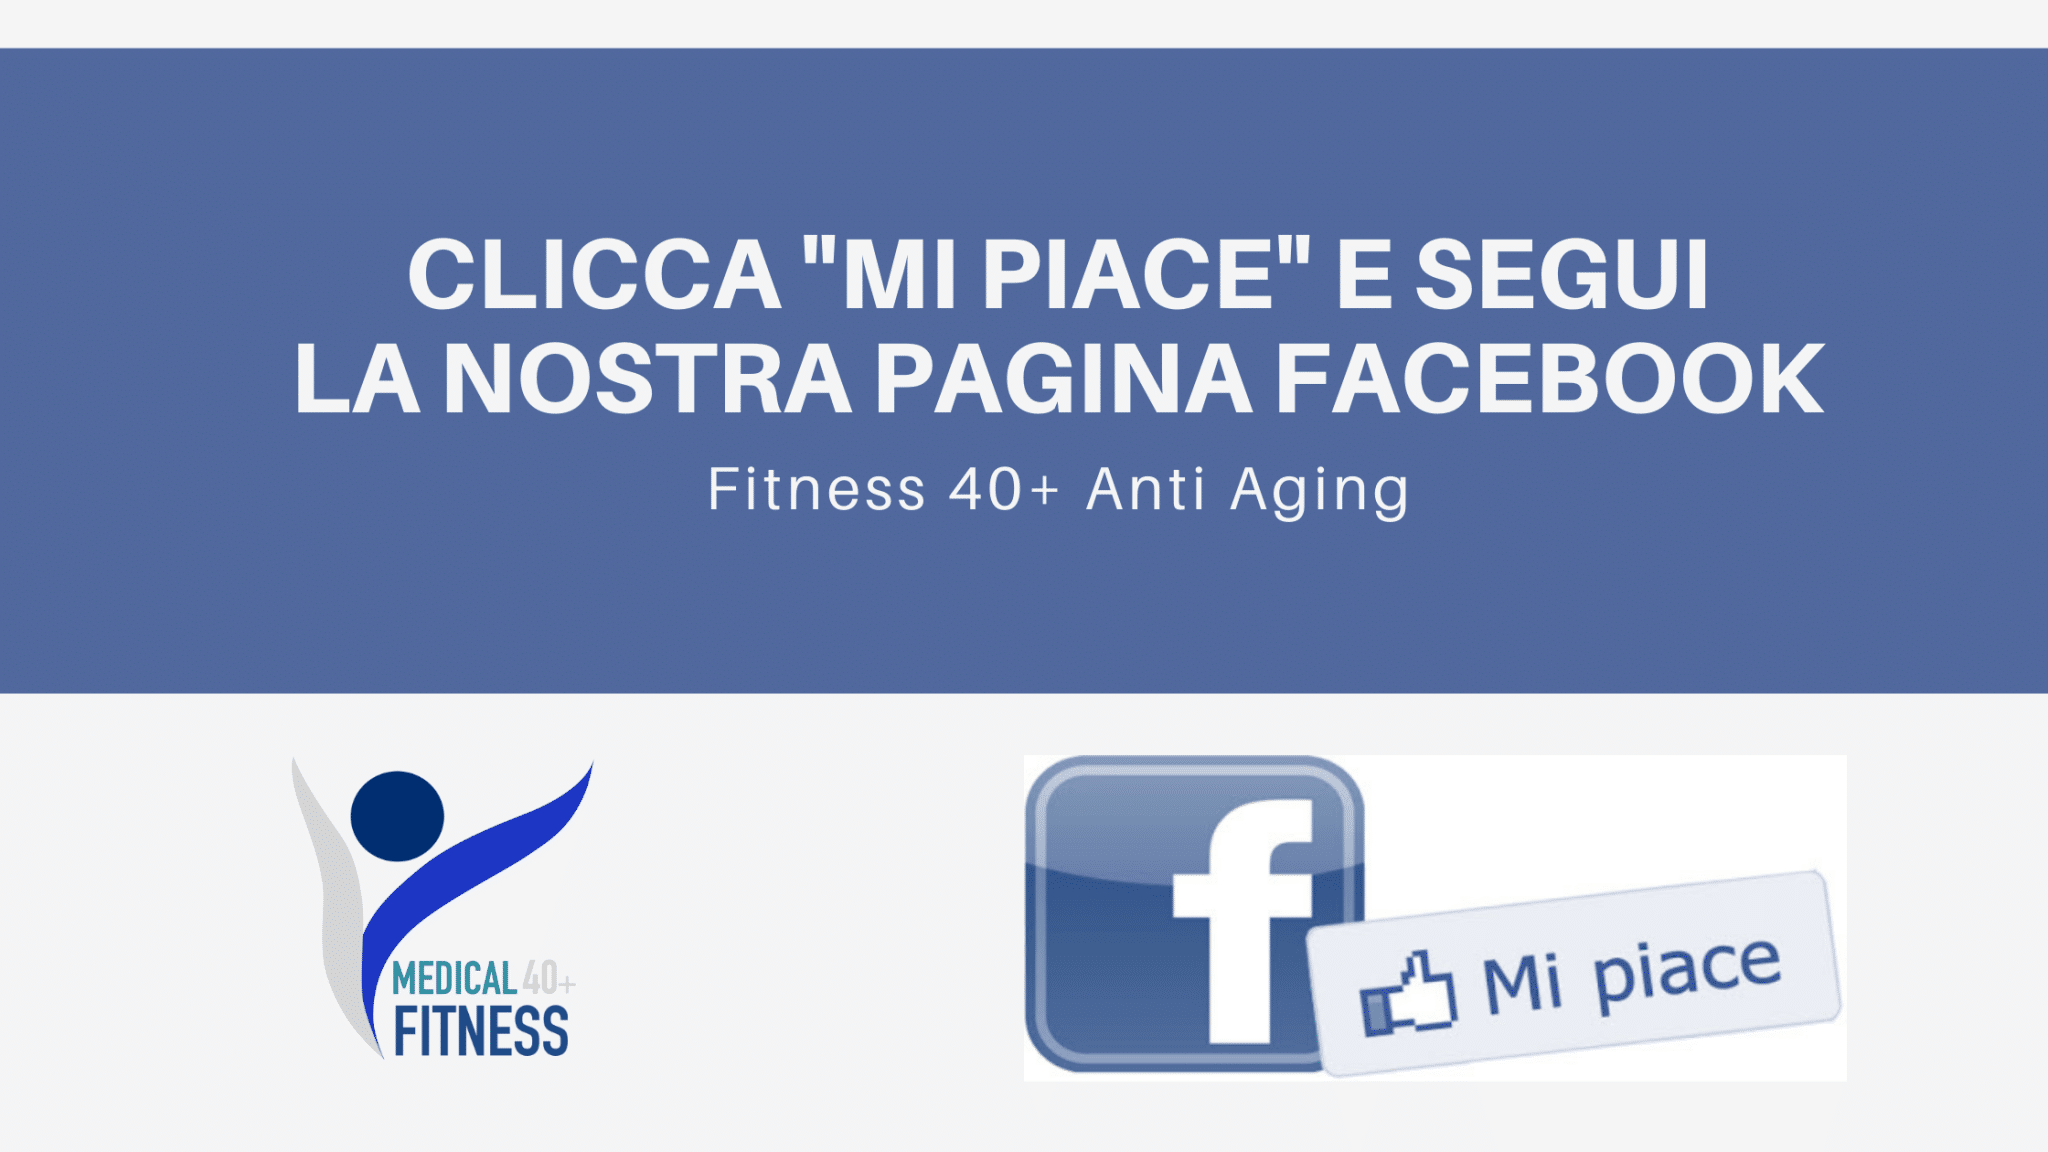 pagina Facebook fitness 40+